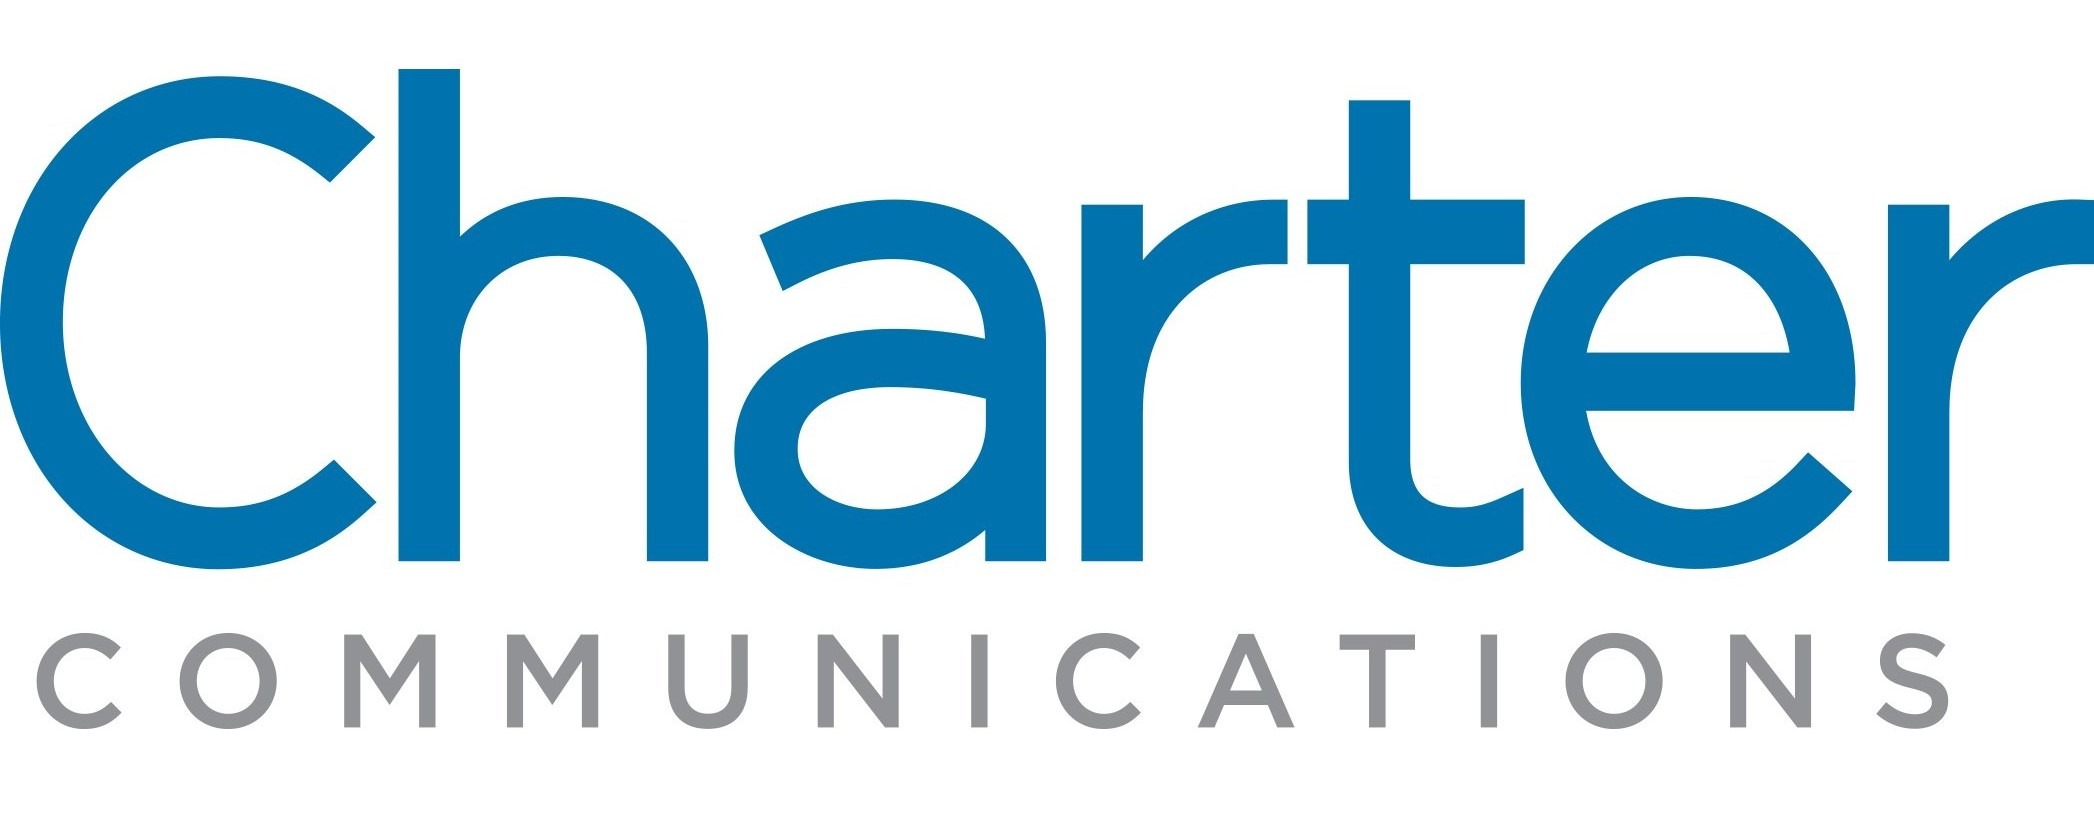 charter_communications_logo